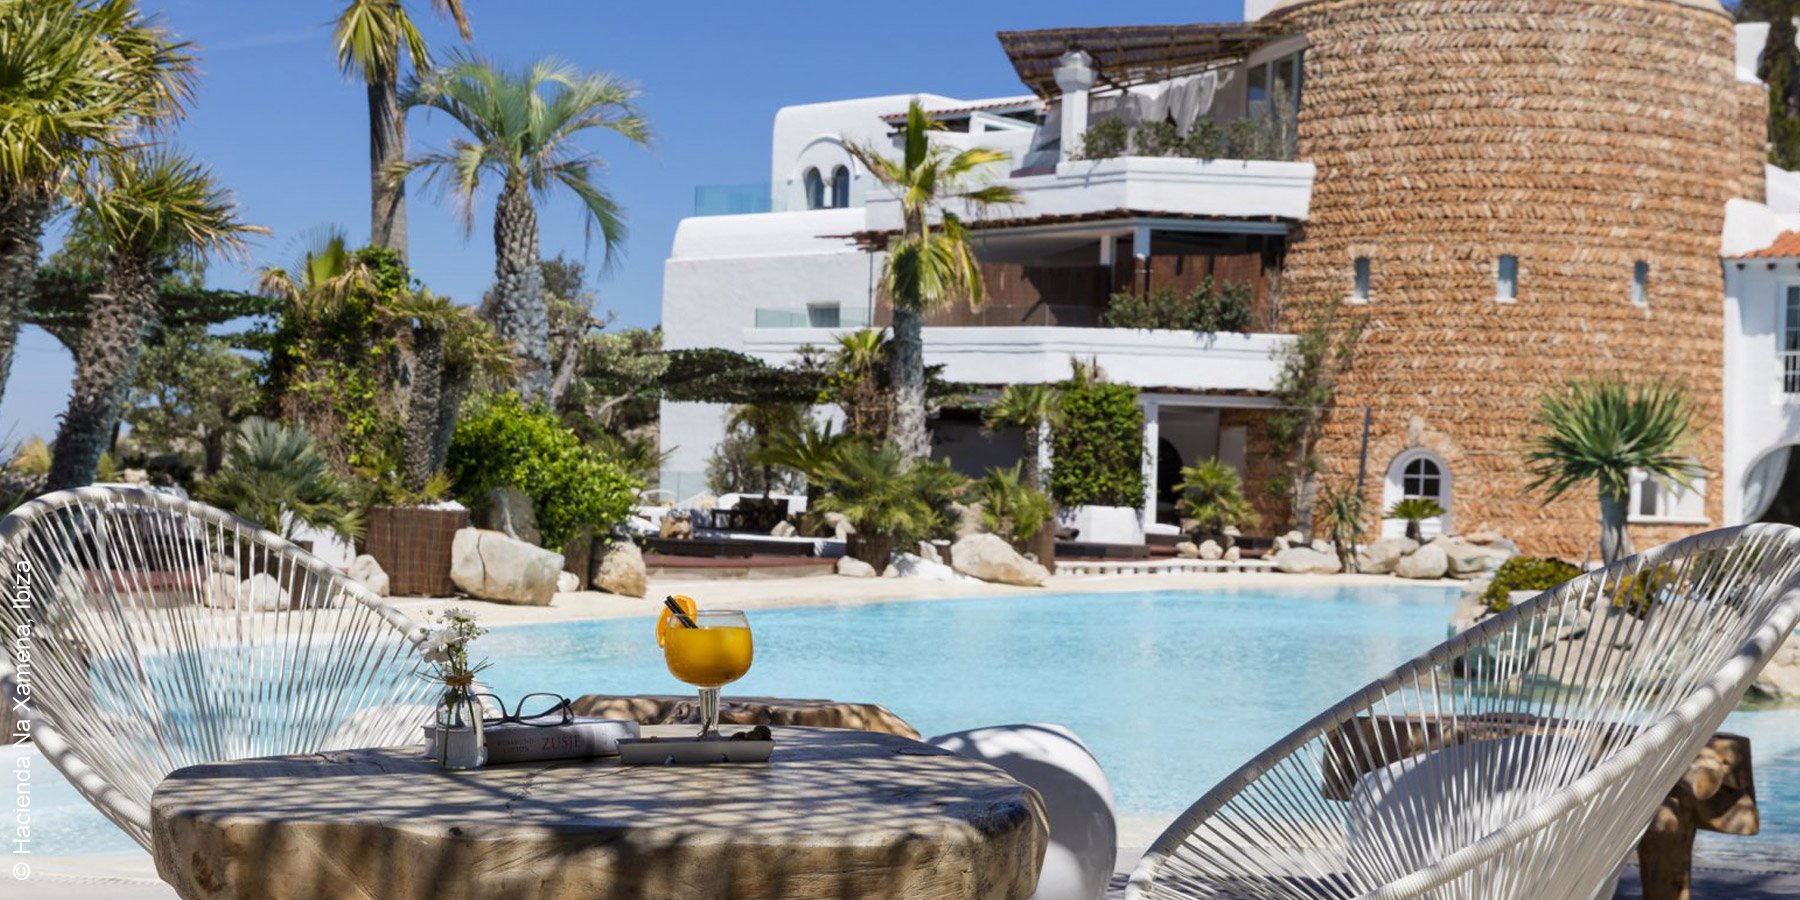 Hotel Hacienda Na Xamena | San Miguel, Ibiza | Outdoorpool | luxuszeit.com